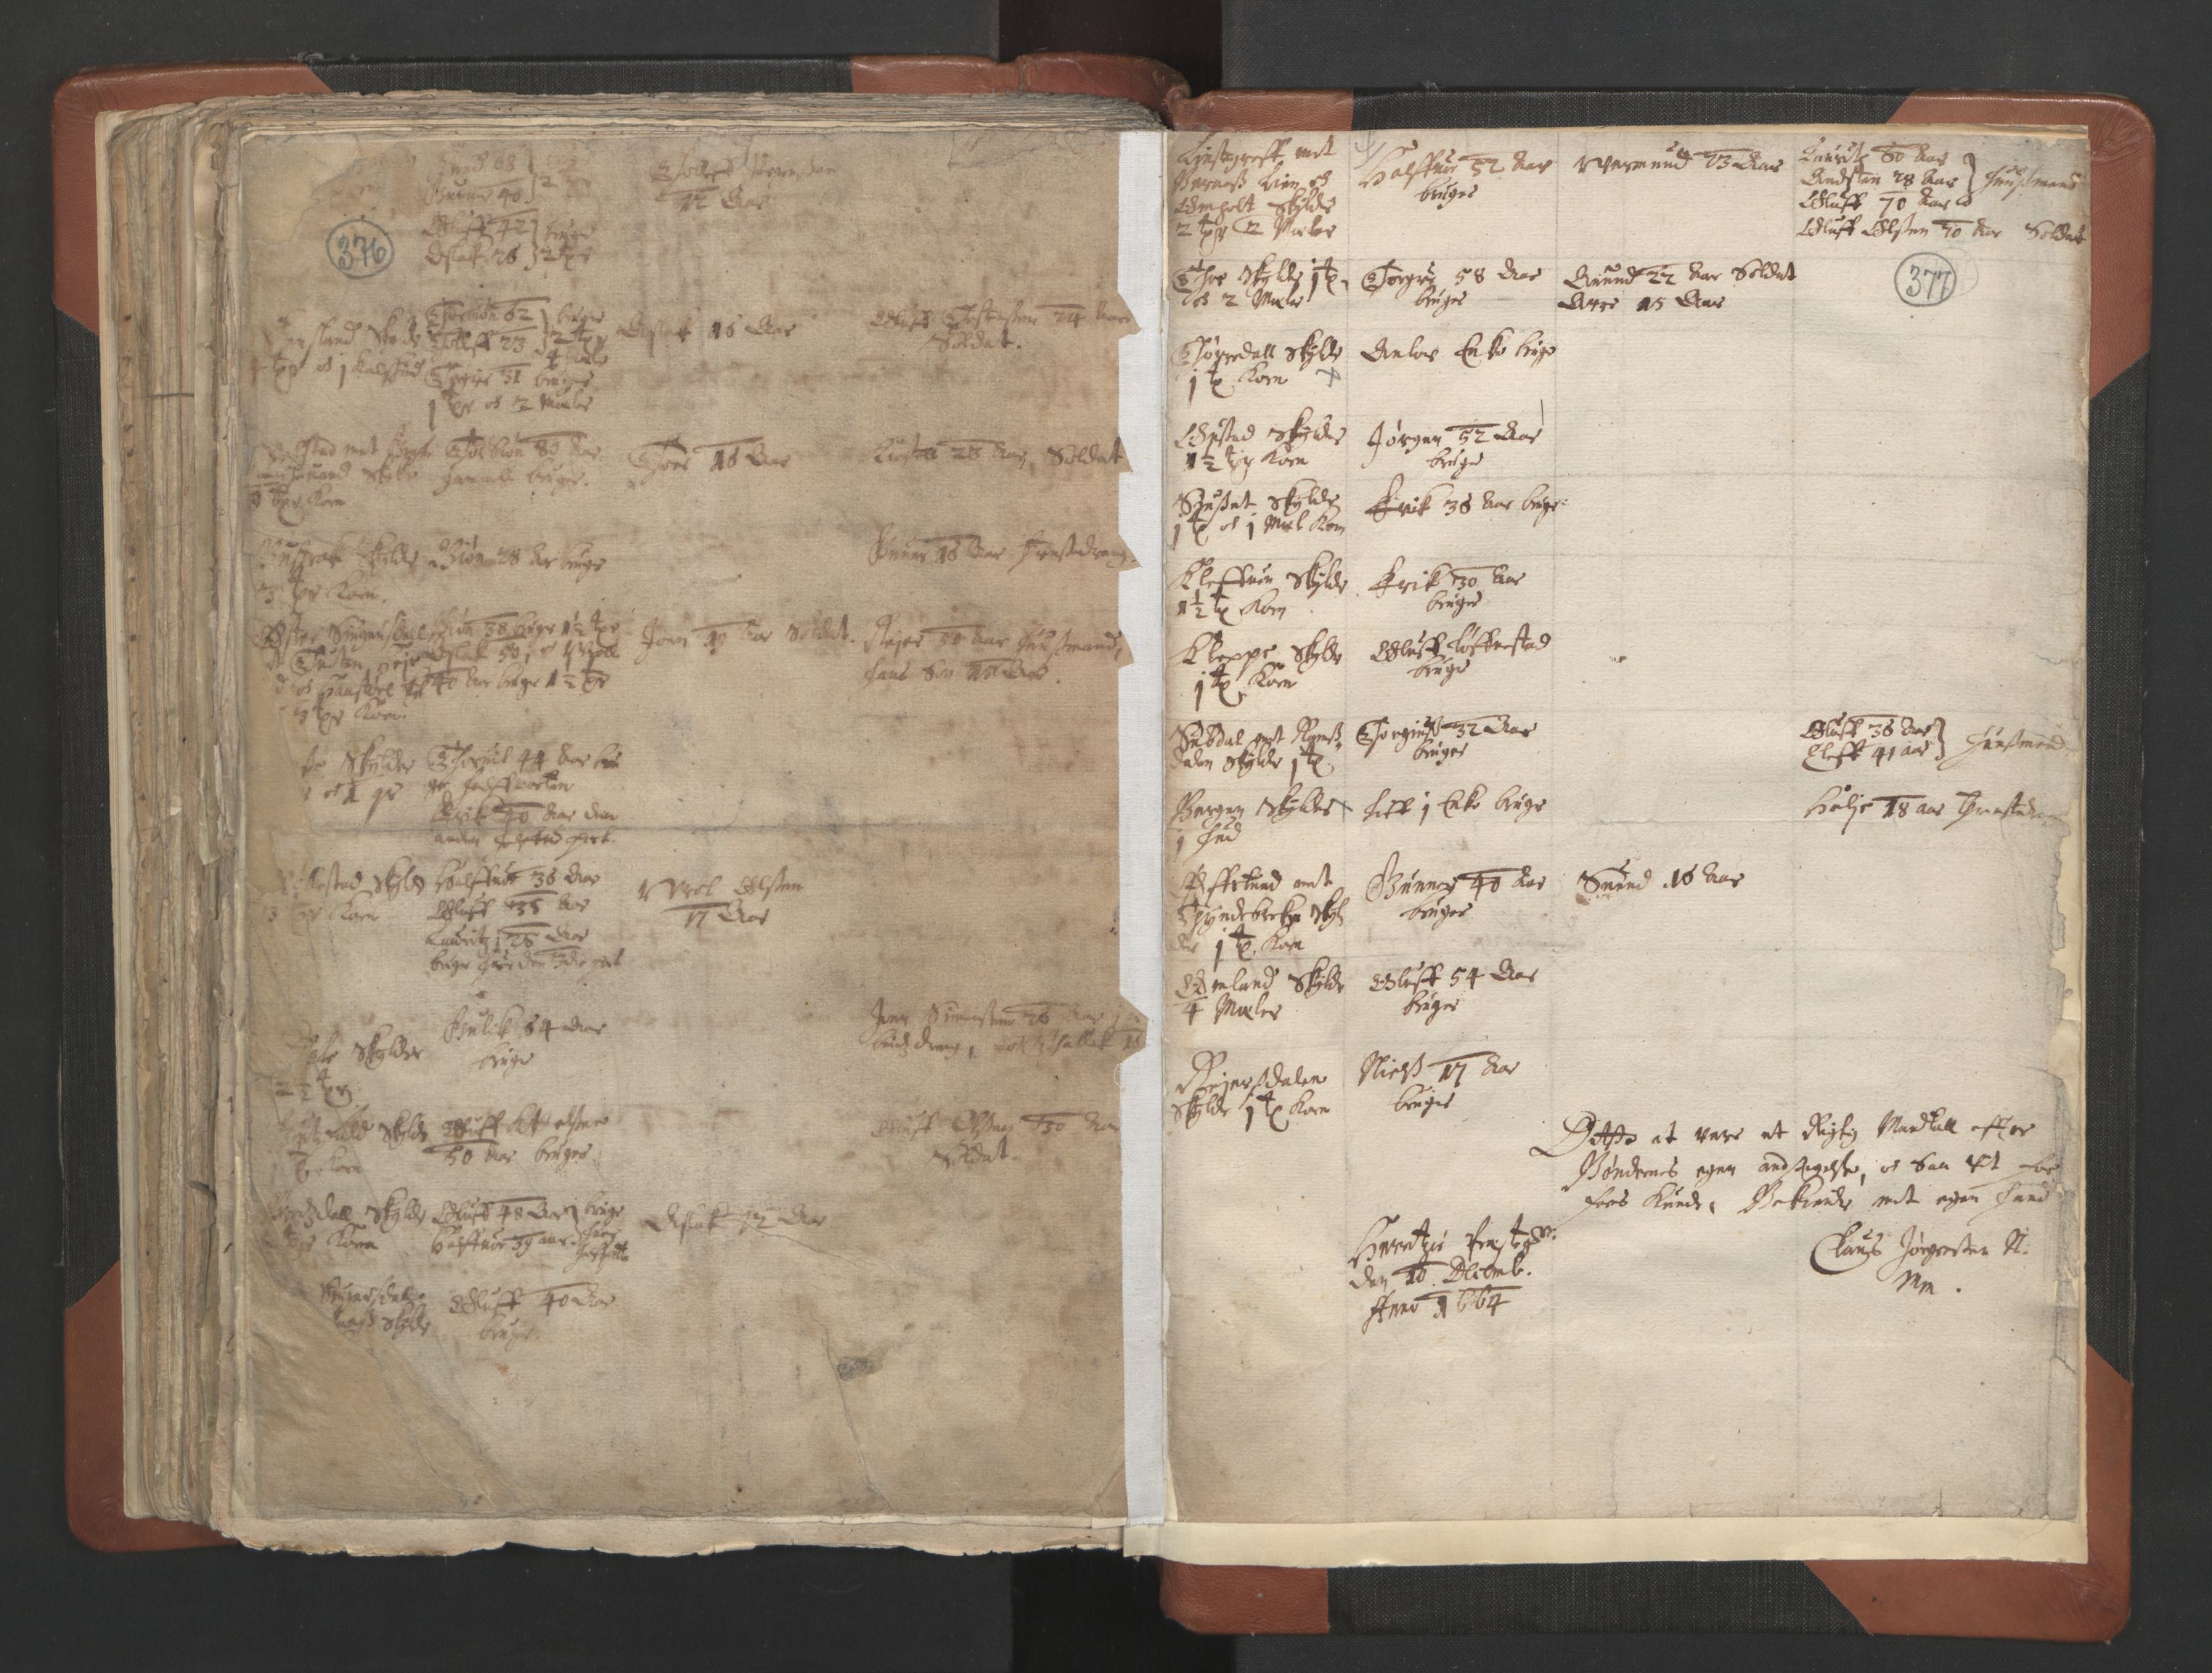 RA, Vicar's Census 1664-1666, no. 12: Øvre Telemark deanery, Nedre Telemark deanery and Bamble deanery, 1664-1666, p. 376-377